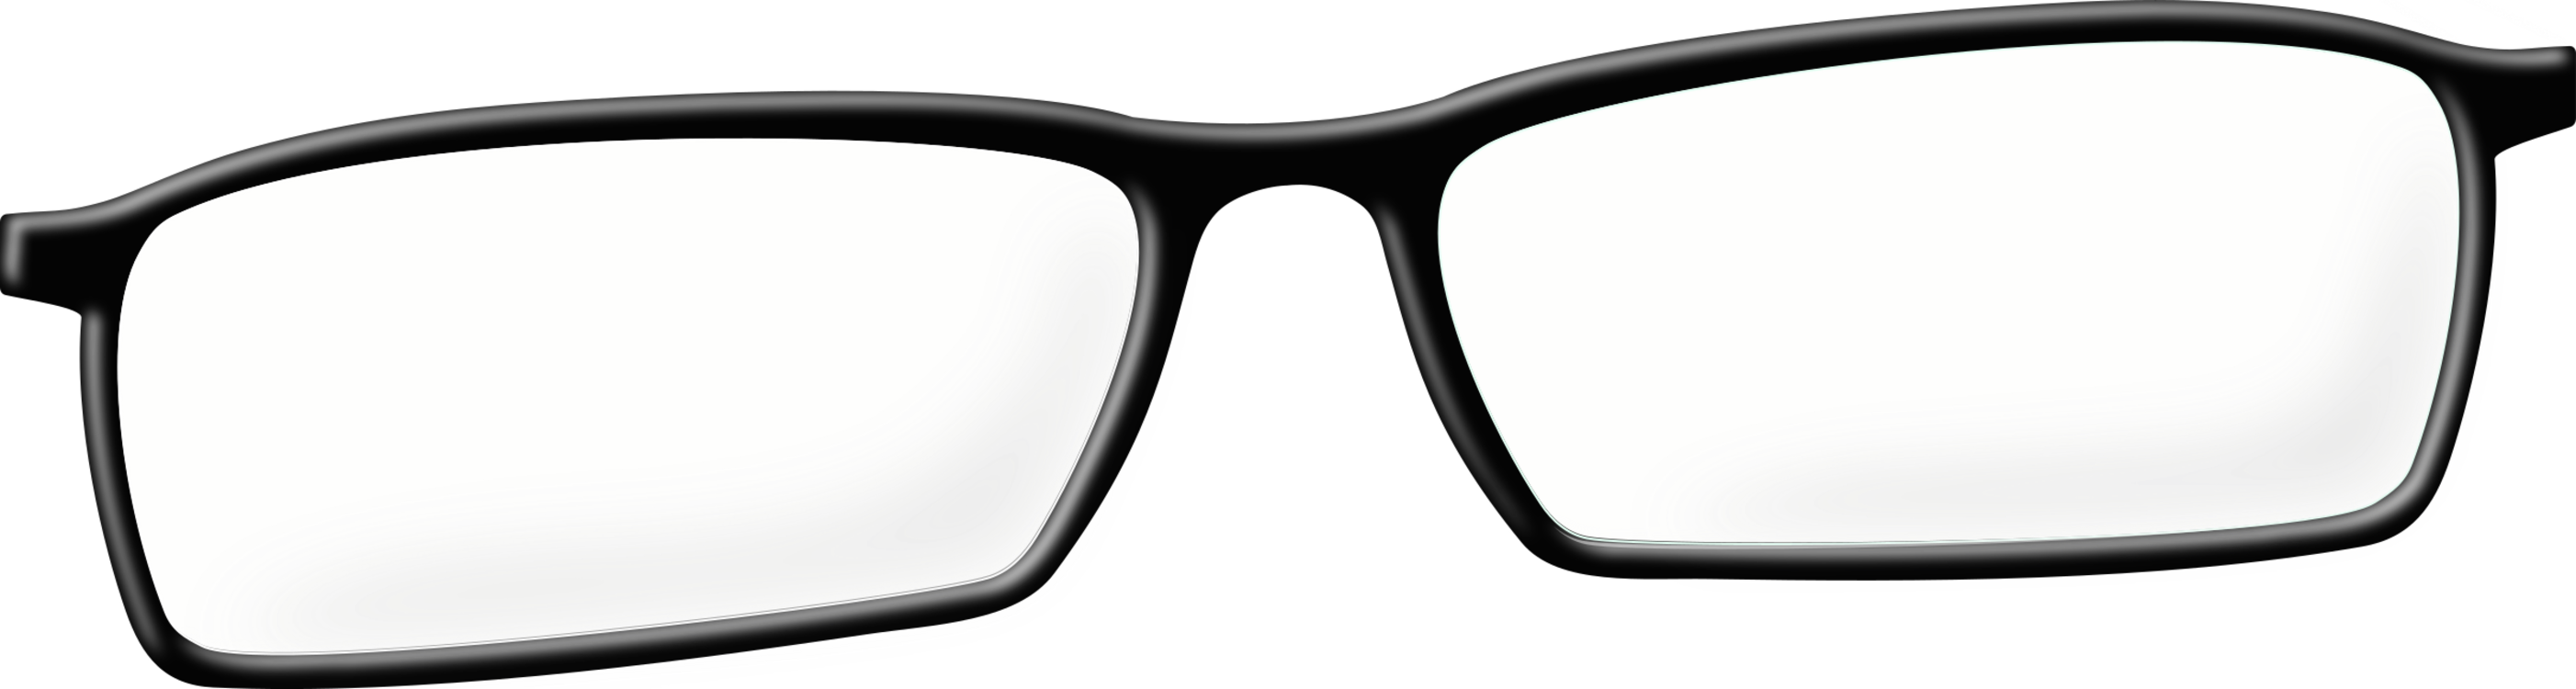 Sunglasses,Vision Care,Eyewear